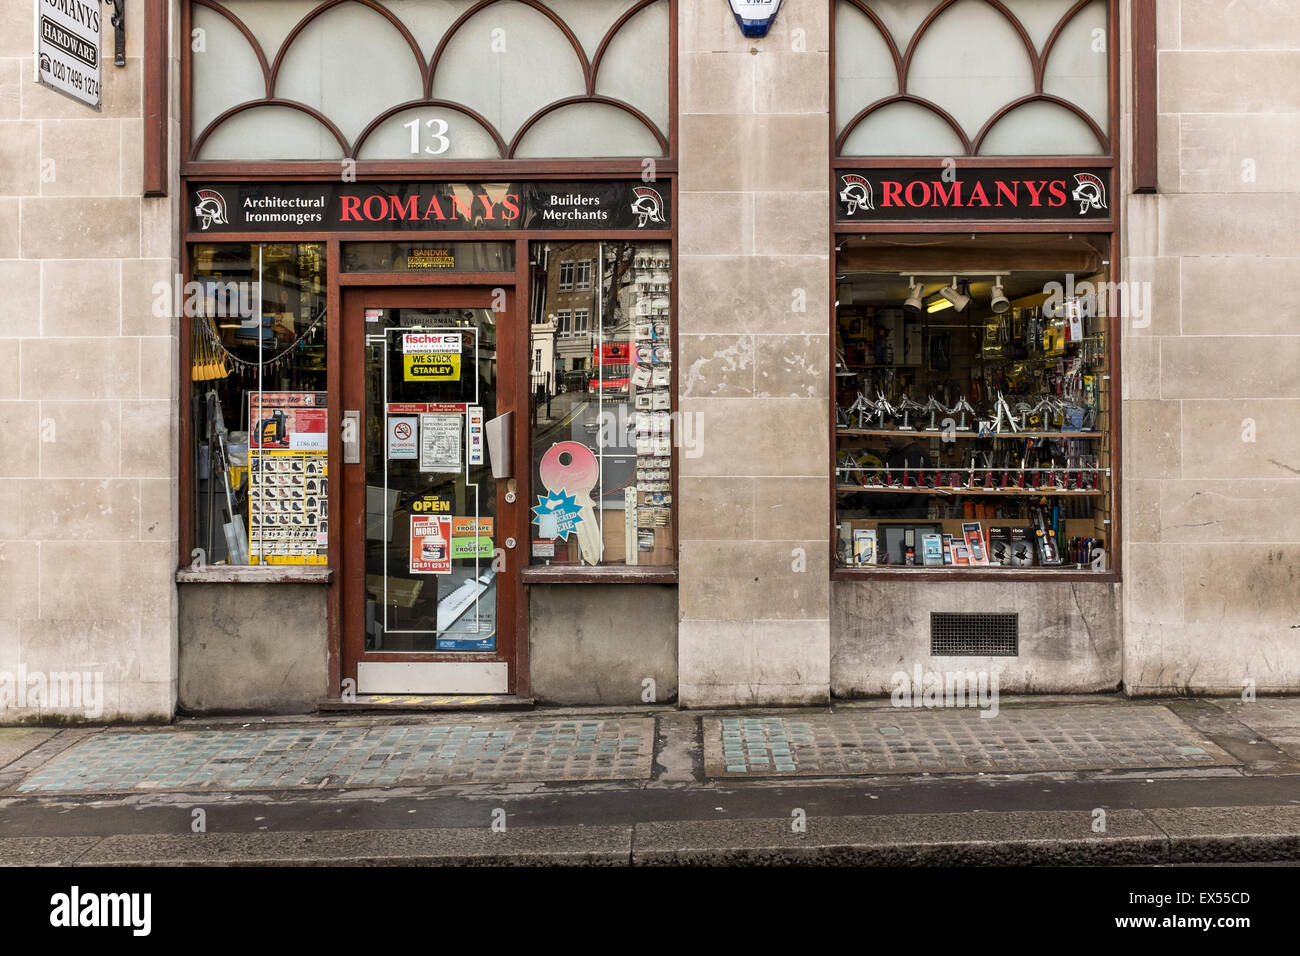 Romanys Ironmongers shop, Mayfair, London Stock Photo